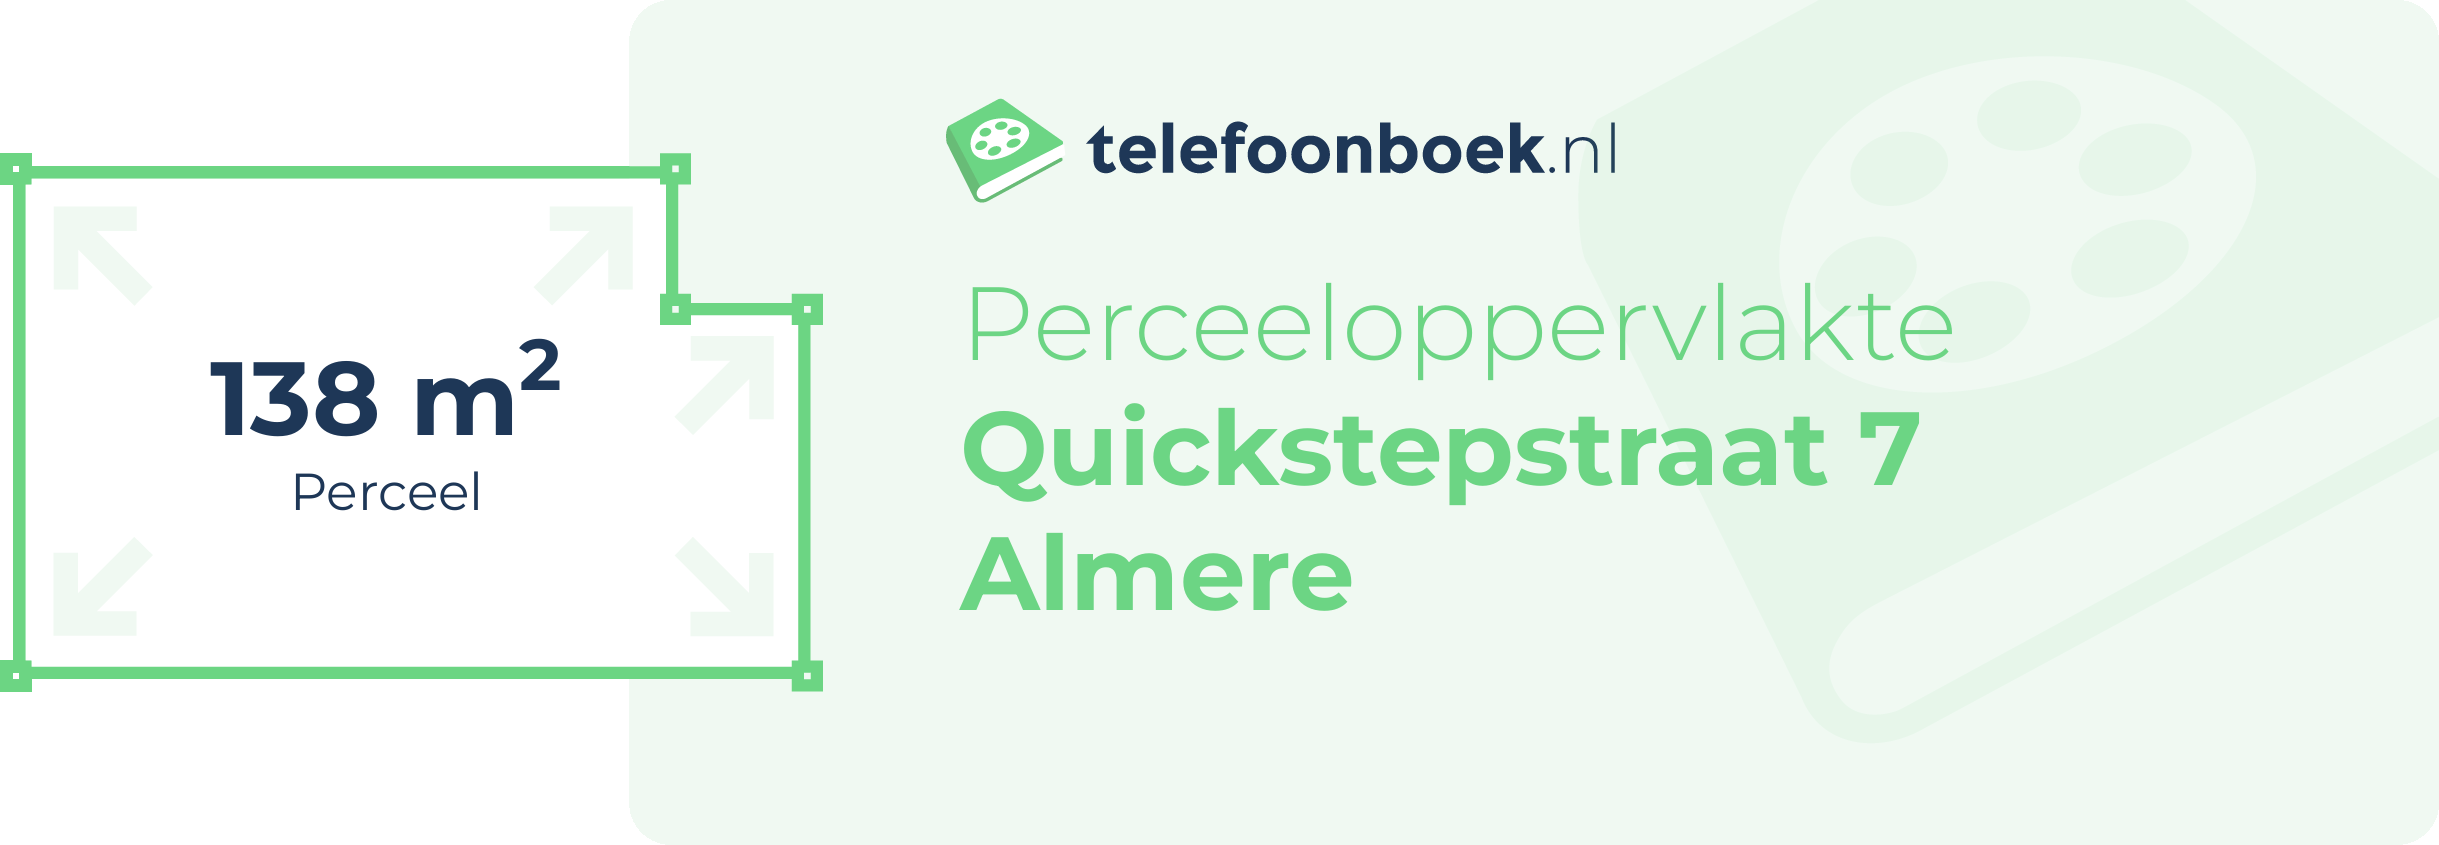 Perceeloppervlakte Quickstepstraat 7 Almere